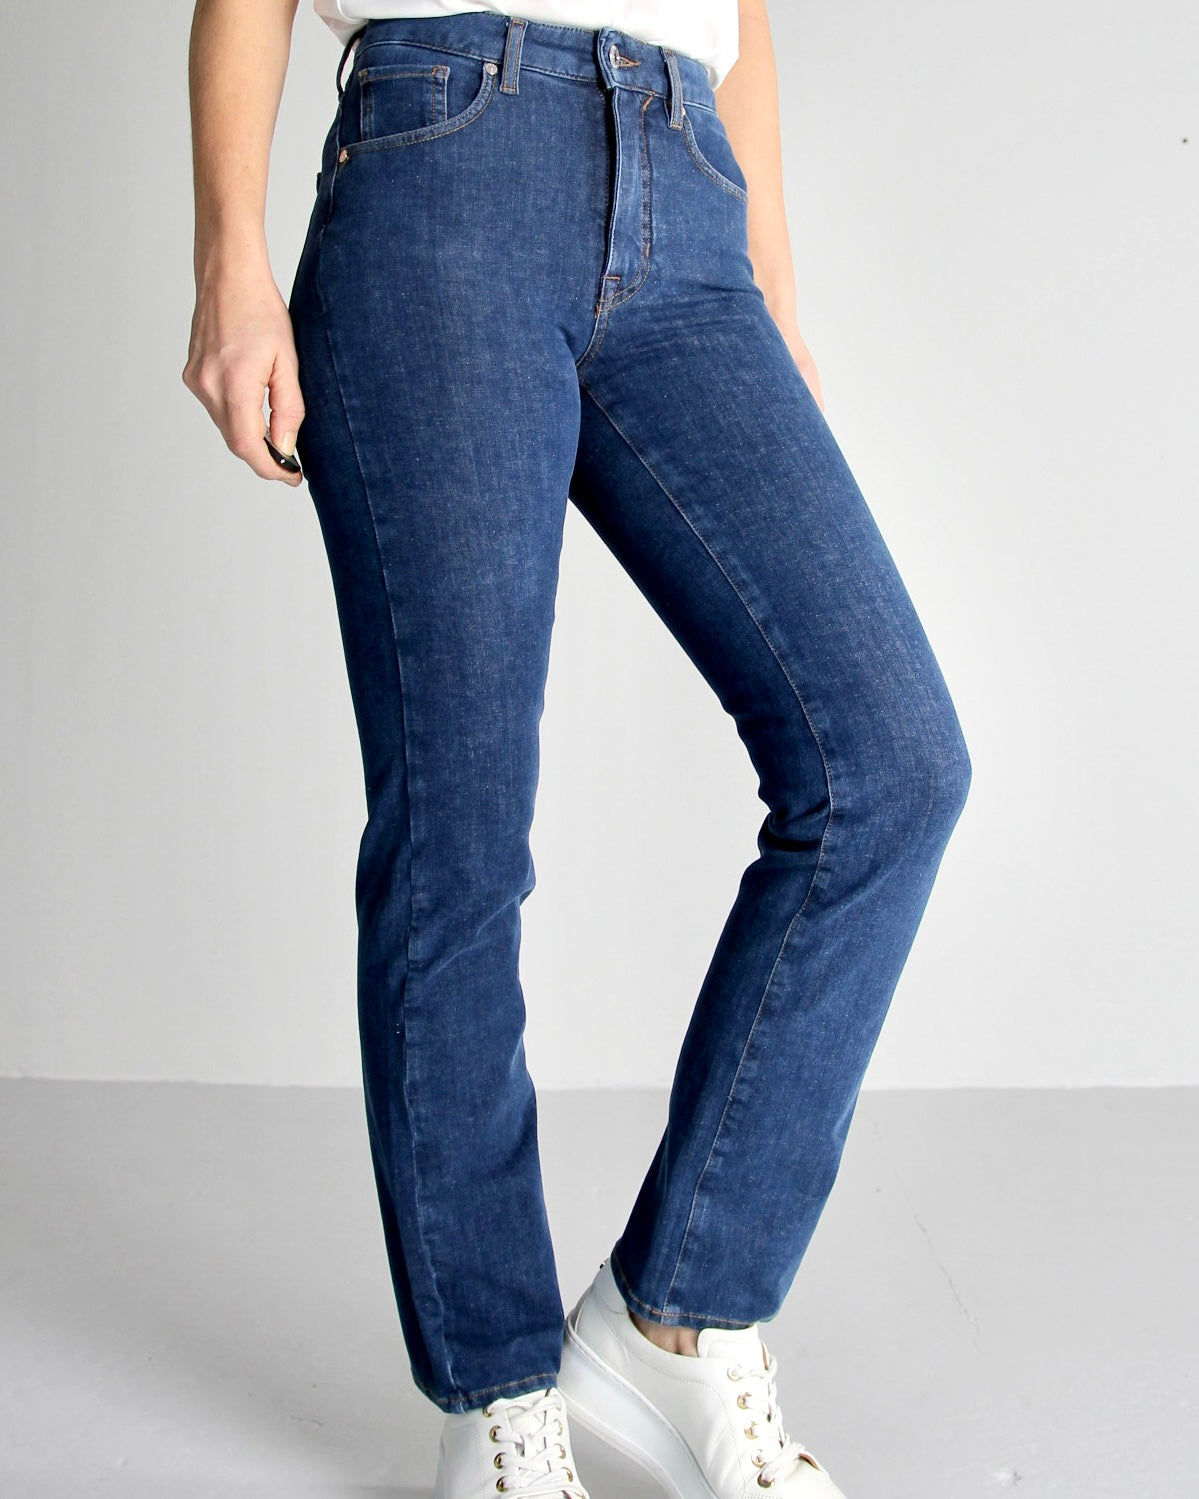 Violet Lake blue Jeans - Dame - Straight leg  - High waist - Stretchy